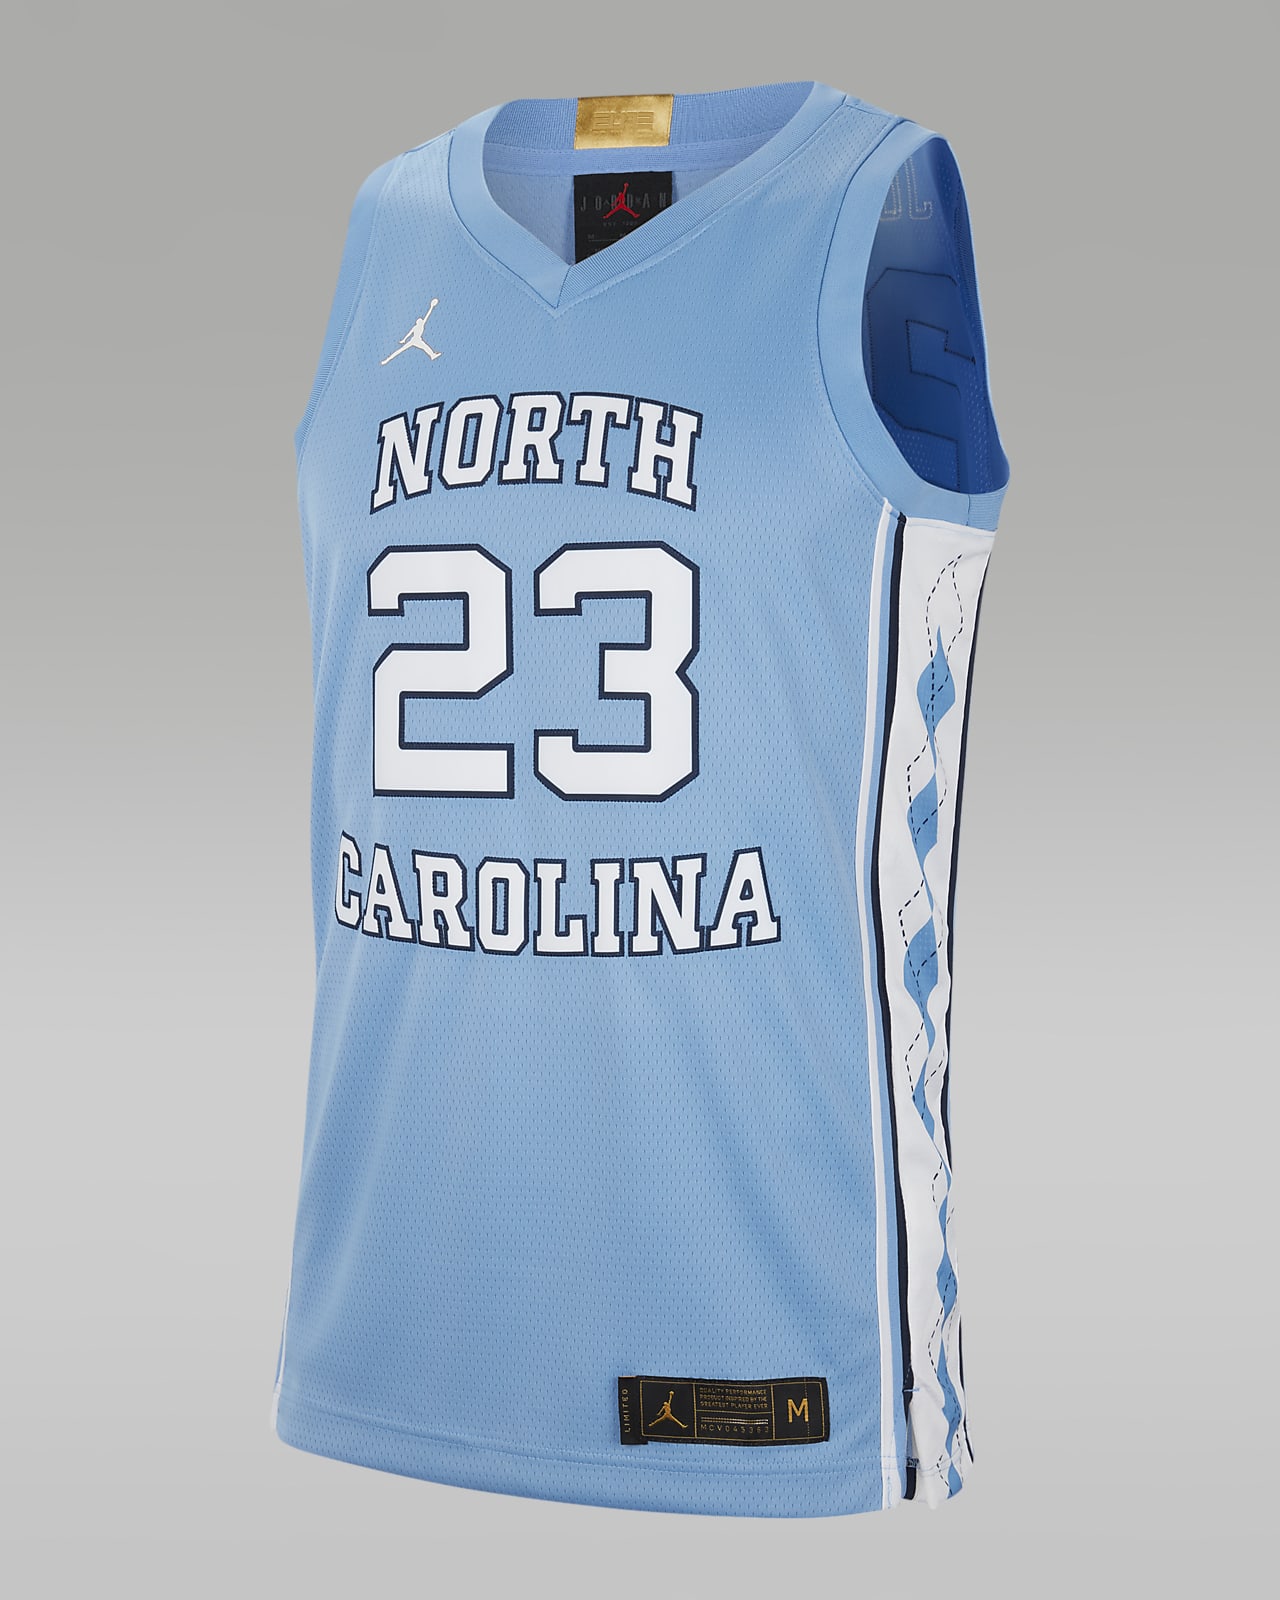 Michael Jordan North Carolina jersey